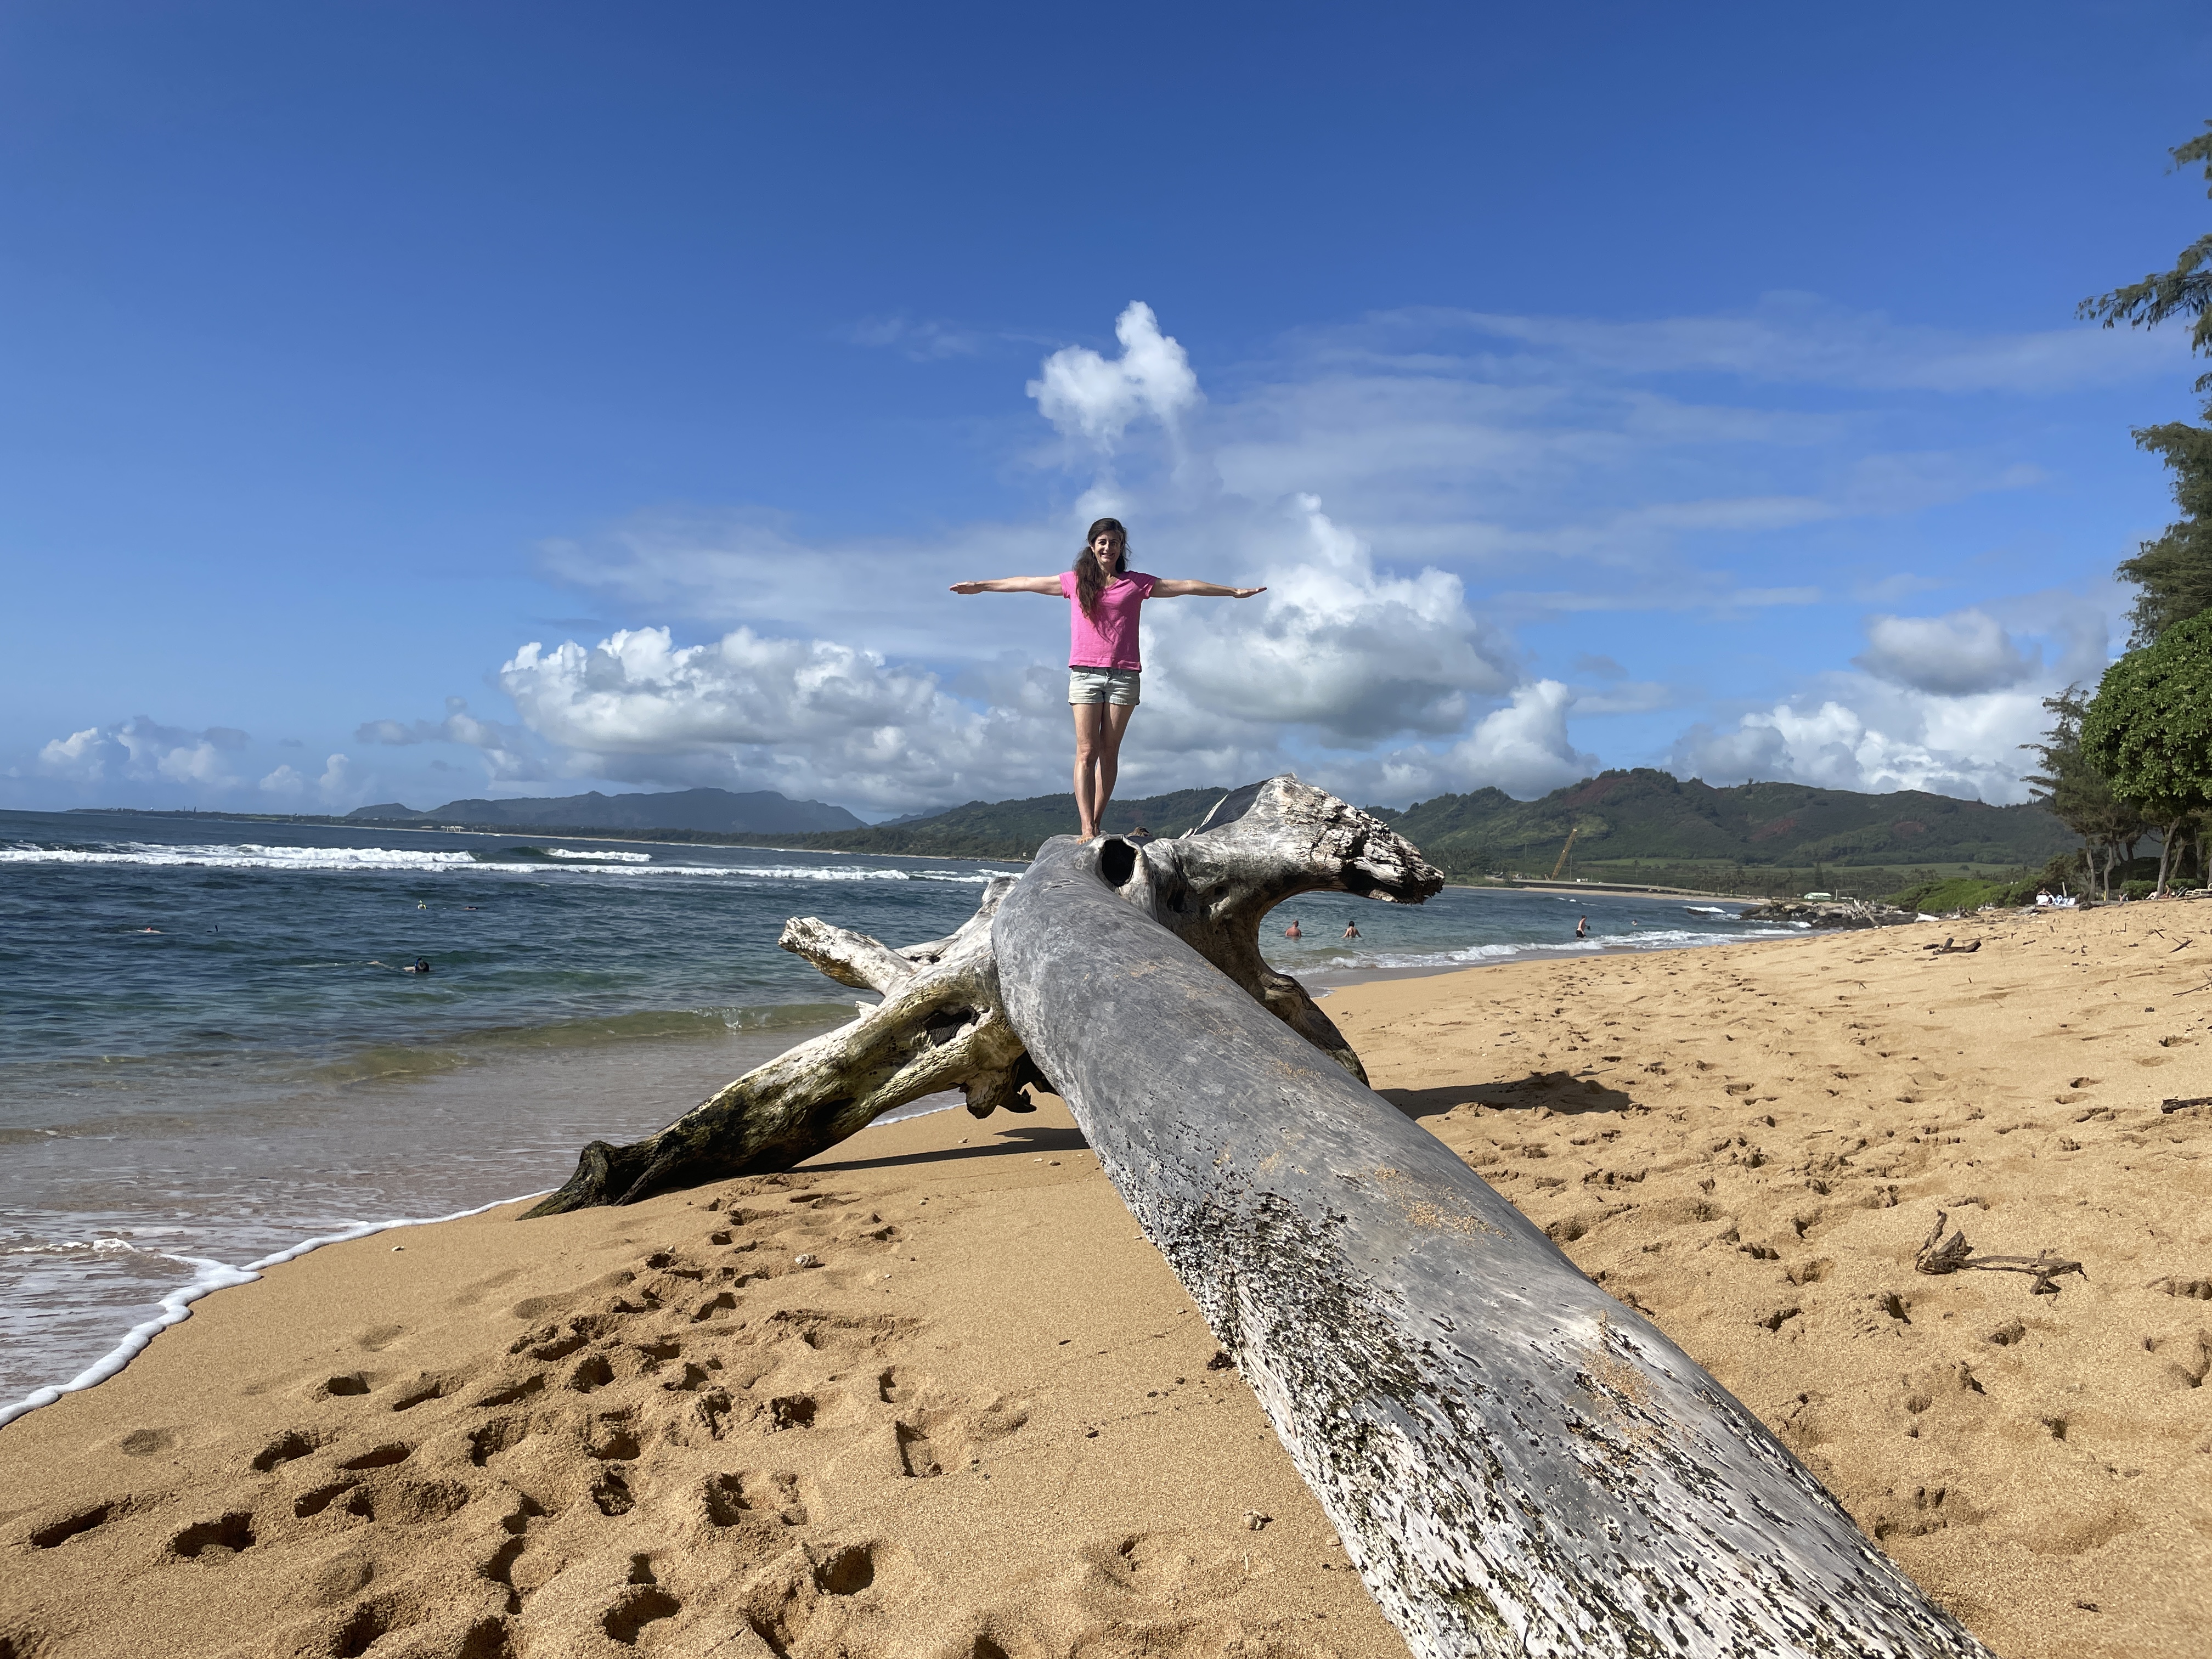 A woman balancing on a driftwood log on a tropical beach